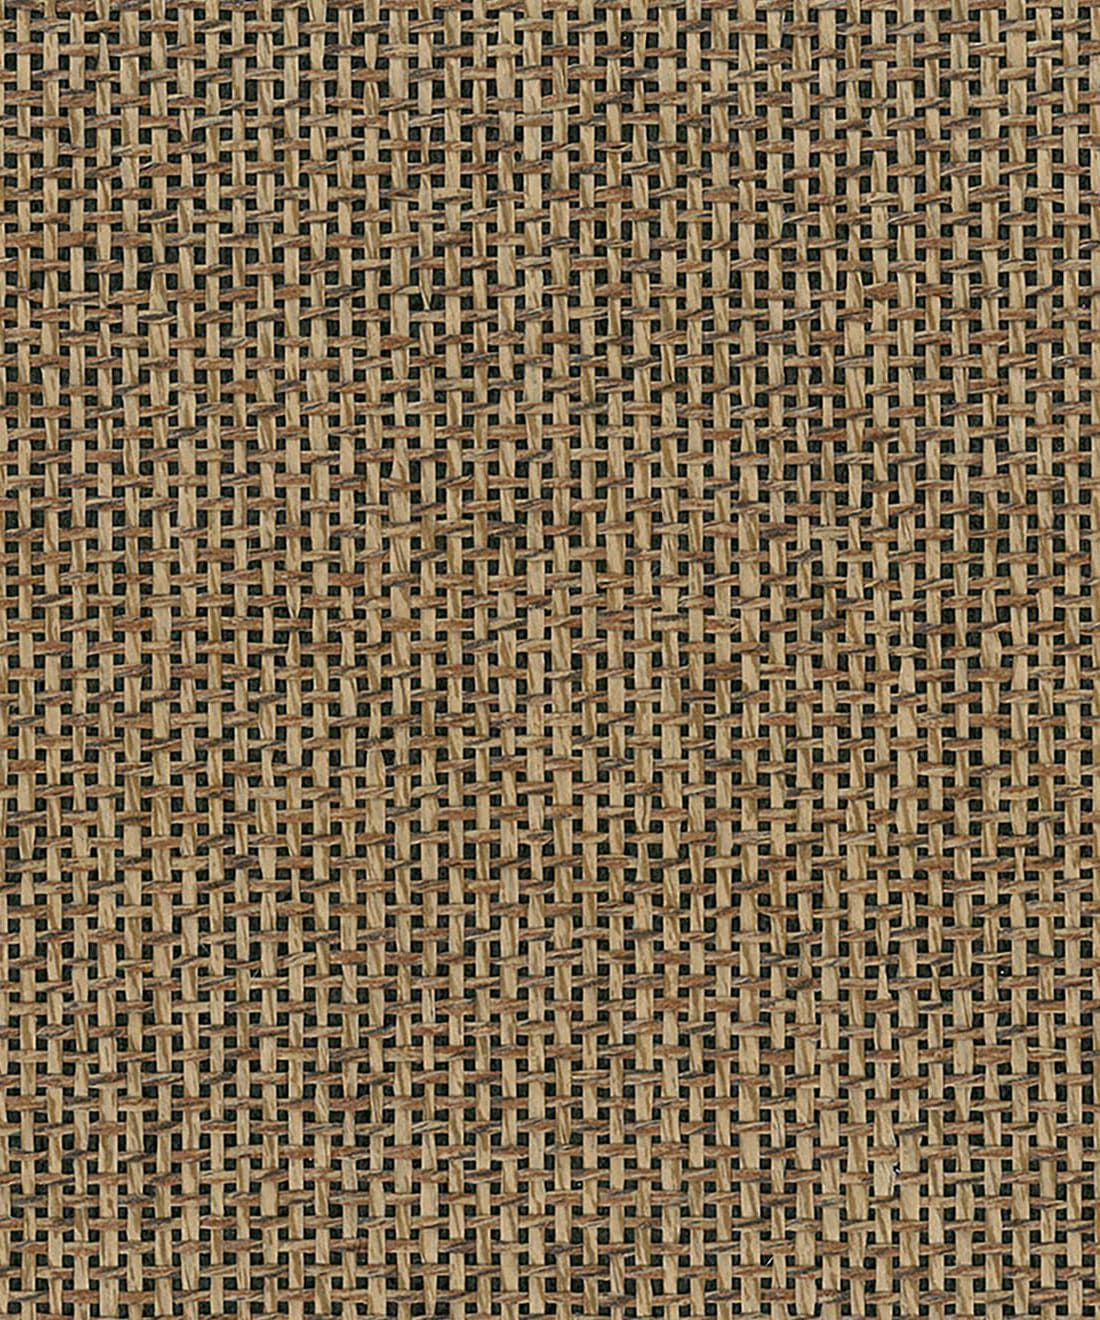 Winter Paperweave Grasscloth Wallpaper - Chestnut